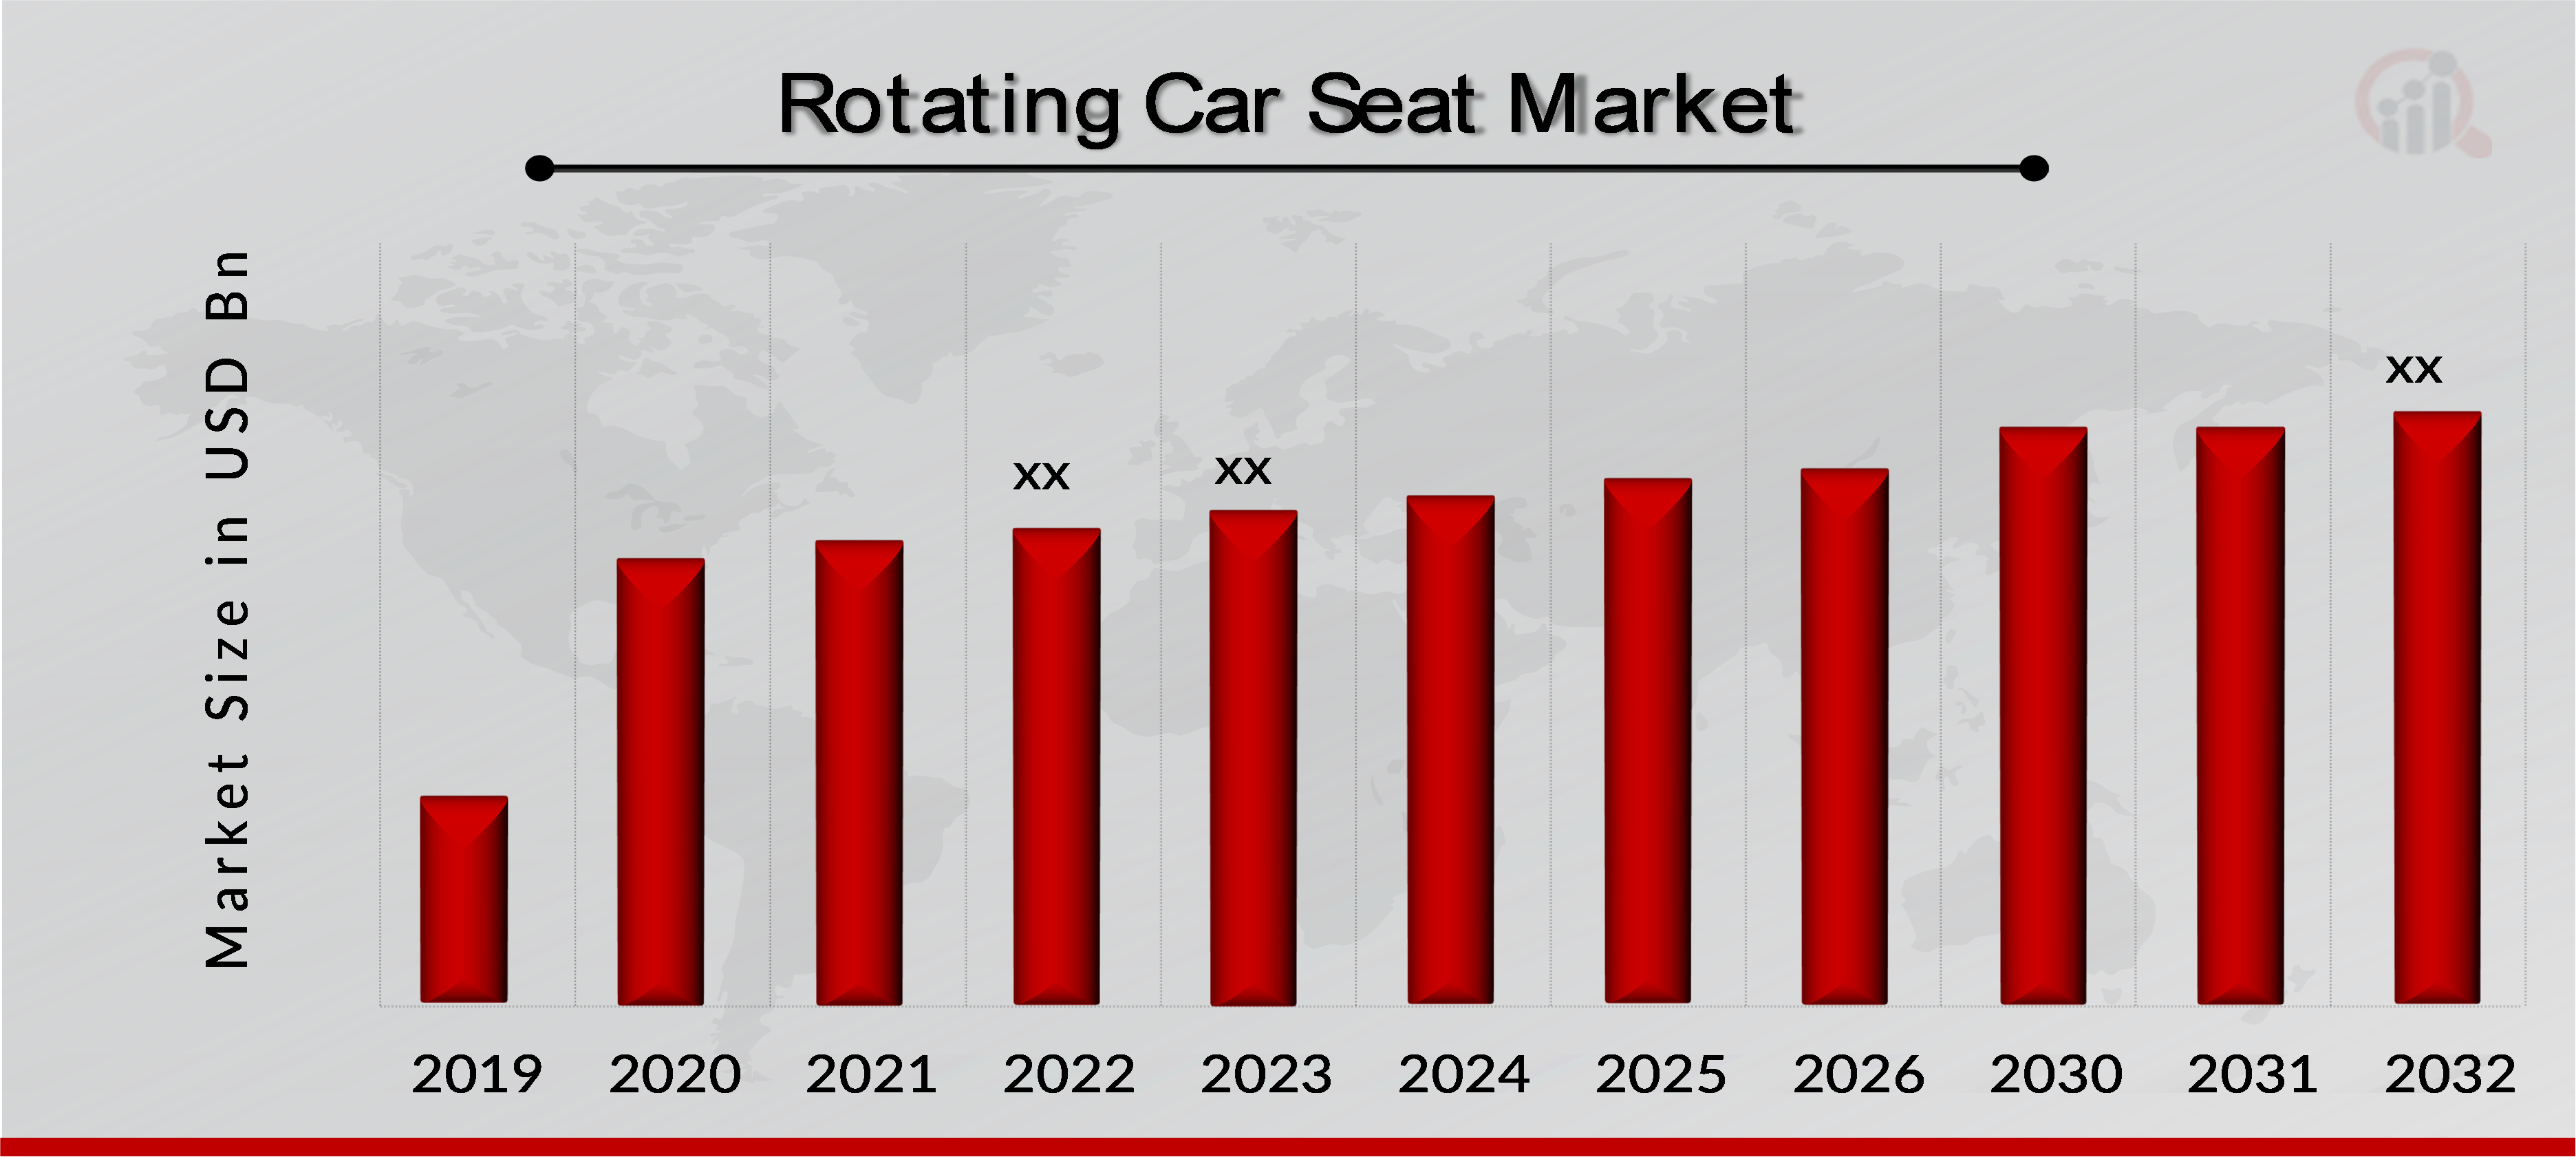 Rotating Car Seat Market